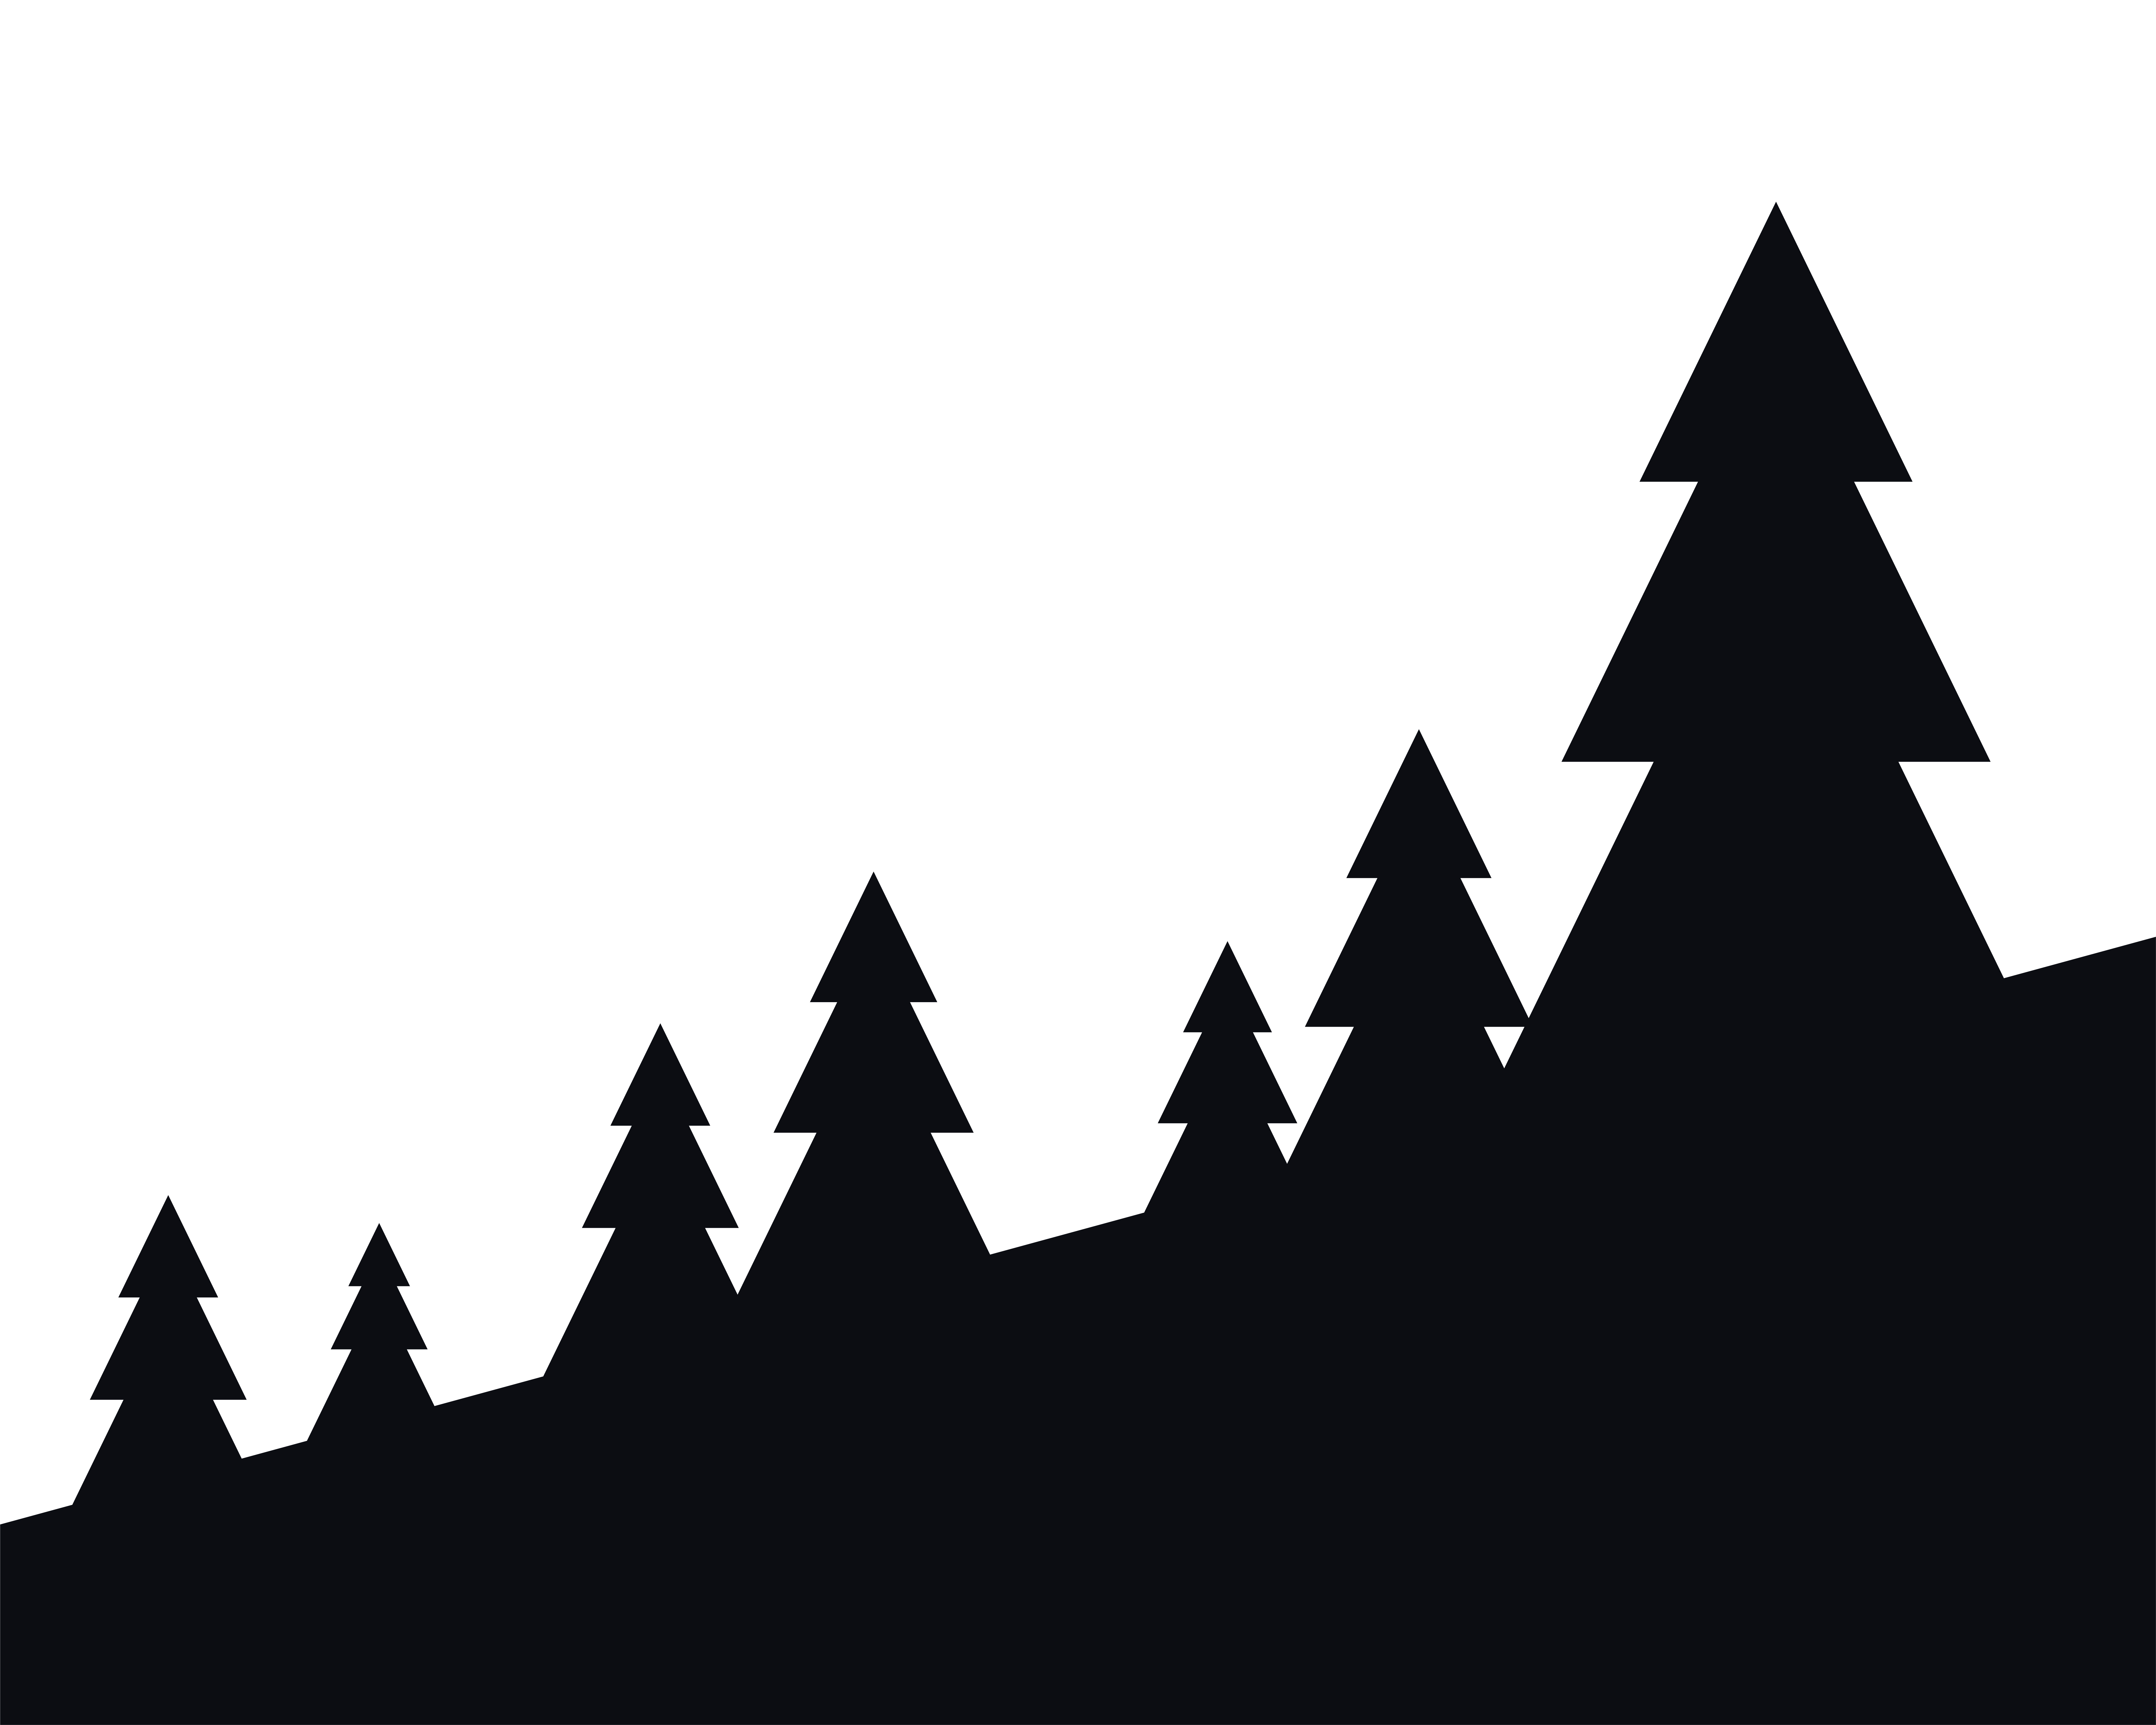 Pine Trees Silhouette Landscape Vector Design Download Free Vectors Clipart Graphics Vector Art